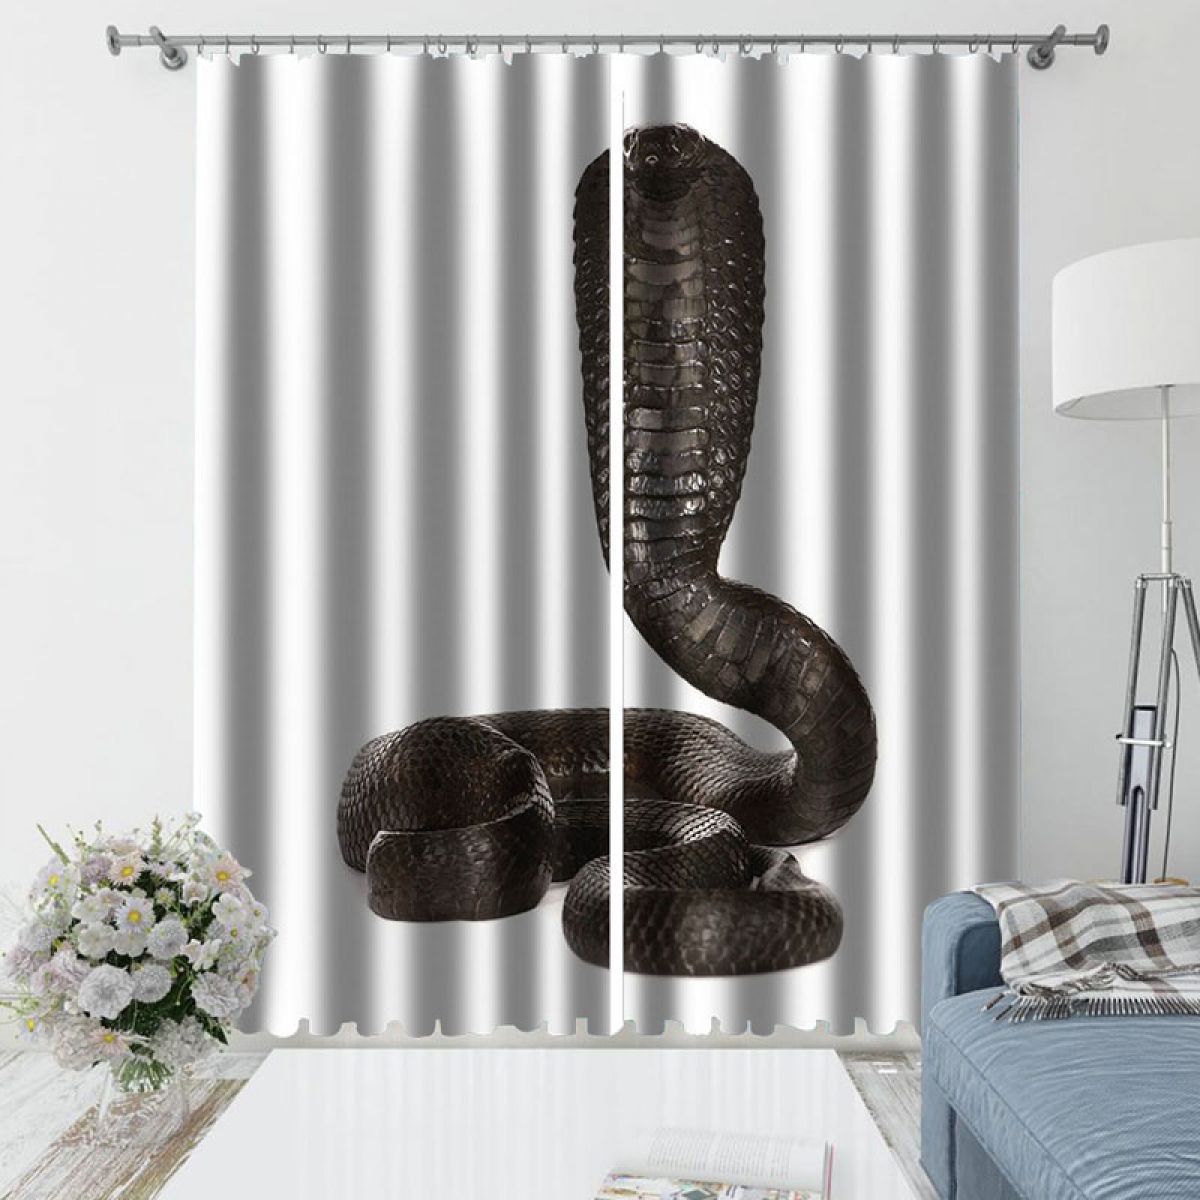 3d snake the death printed window curtain home decor 6551